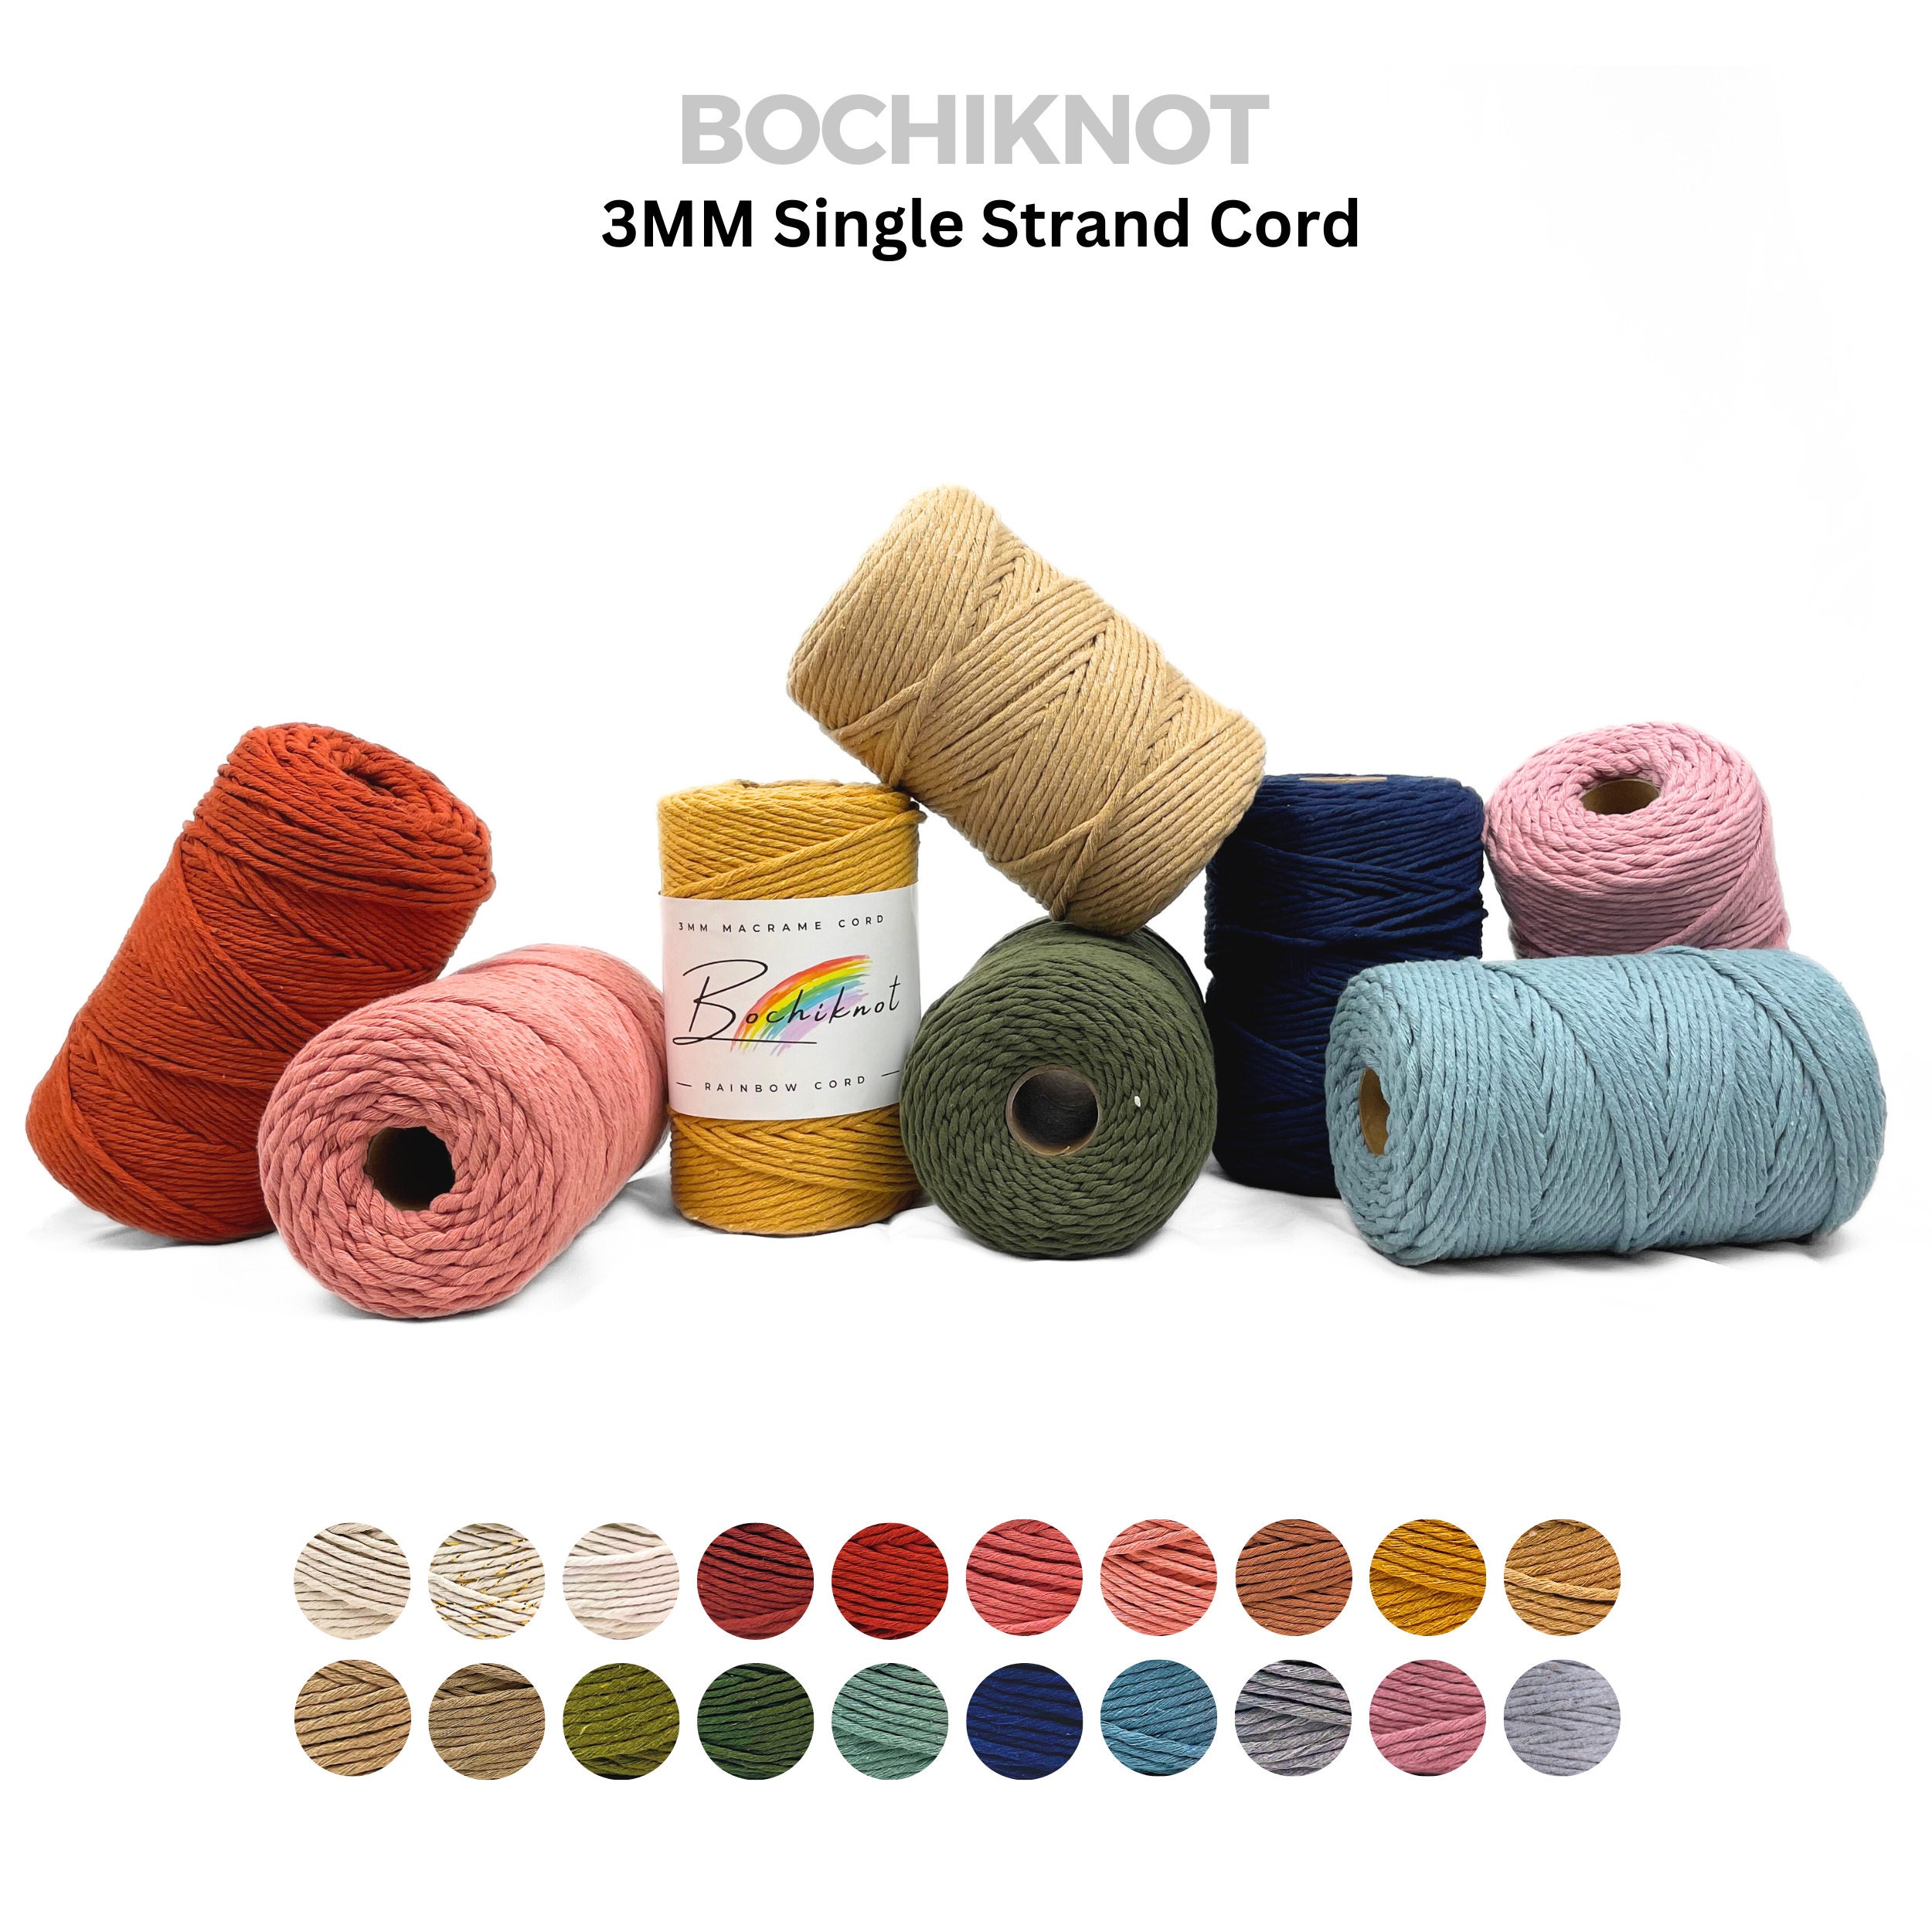 BOCHIKNOT Macrame Cord 5mm x 105yds - Multi-Colored Cotton Cord